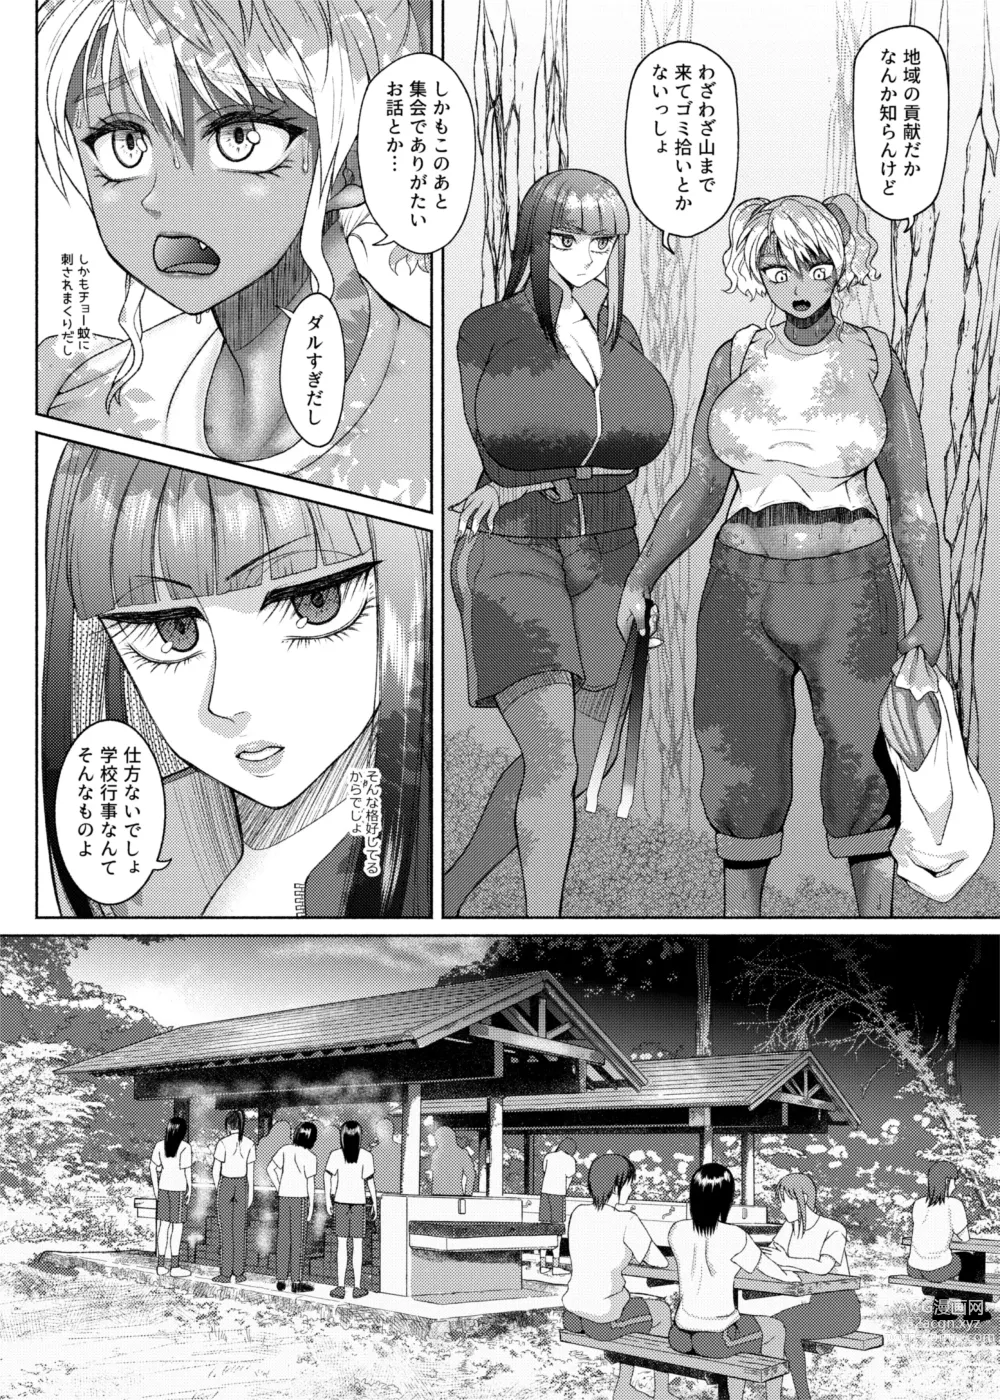 Page 2 of doujinshi FutaBitch  Arc 10 - ① + Previews